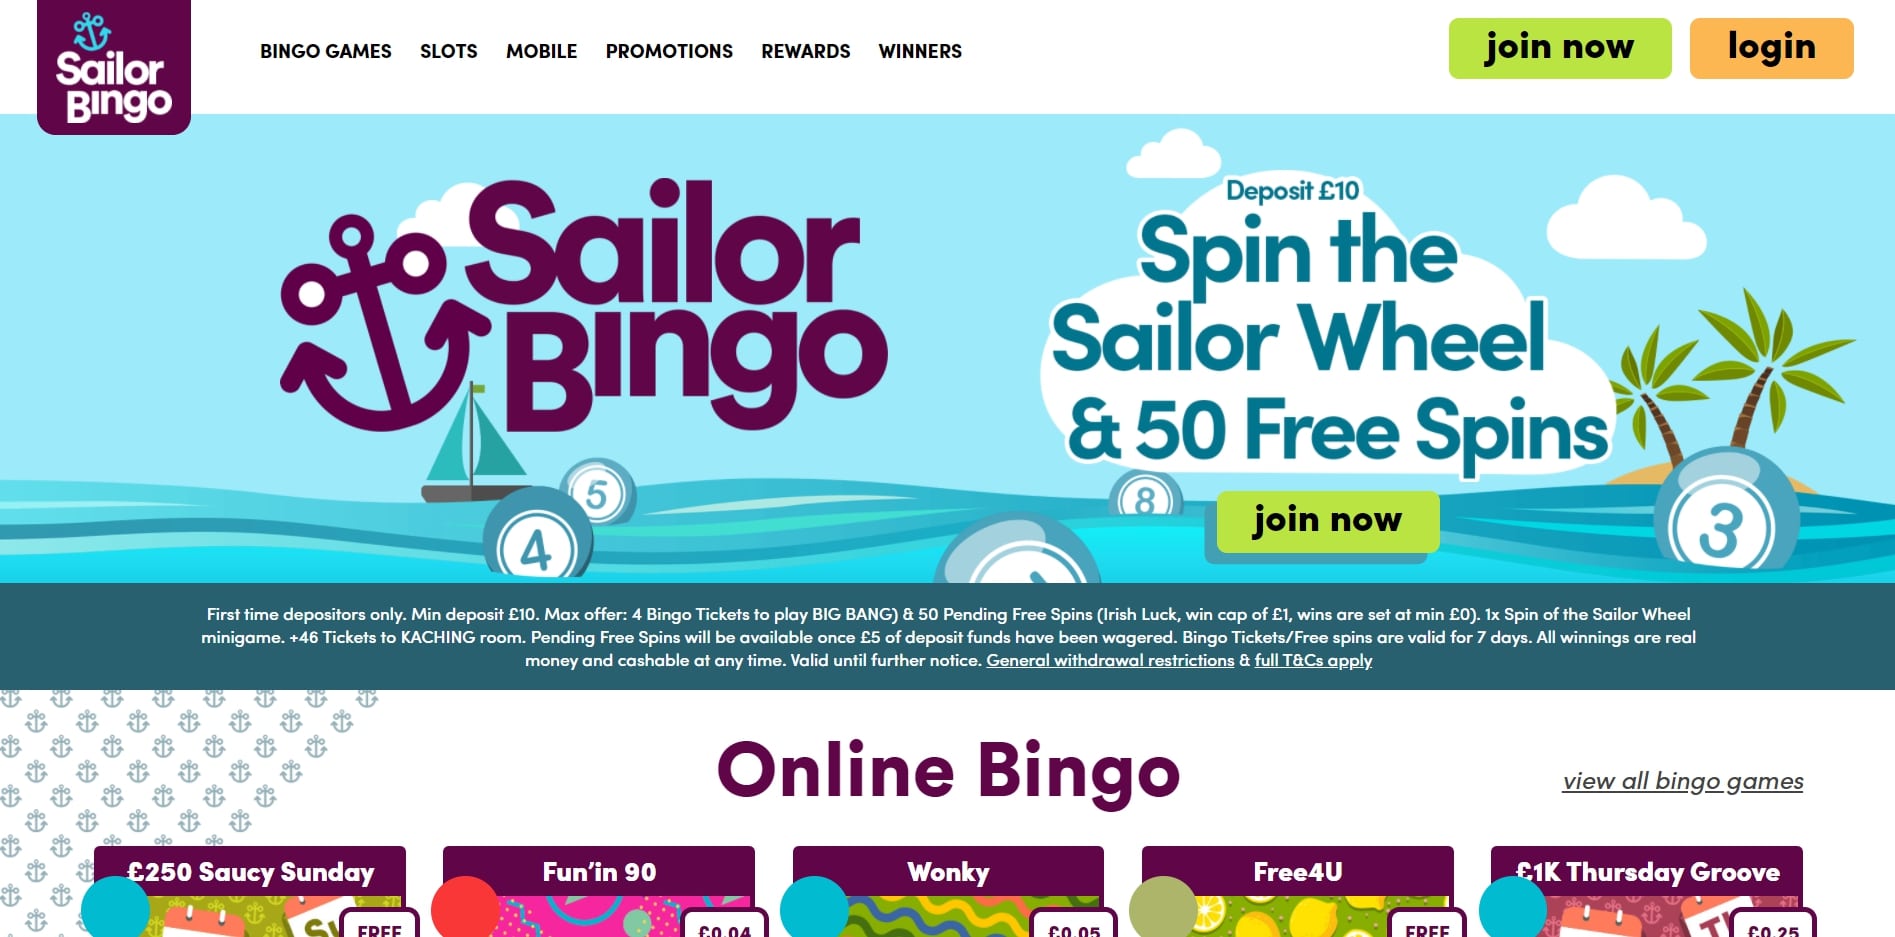 Sailor Bingo Casino Review